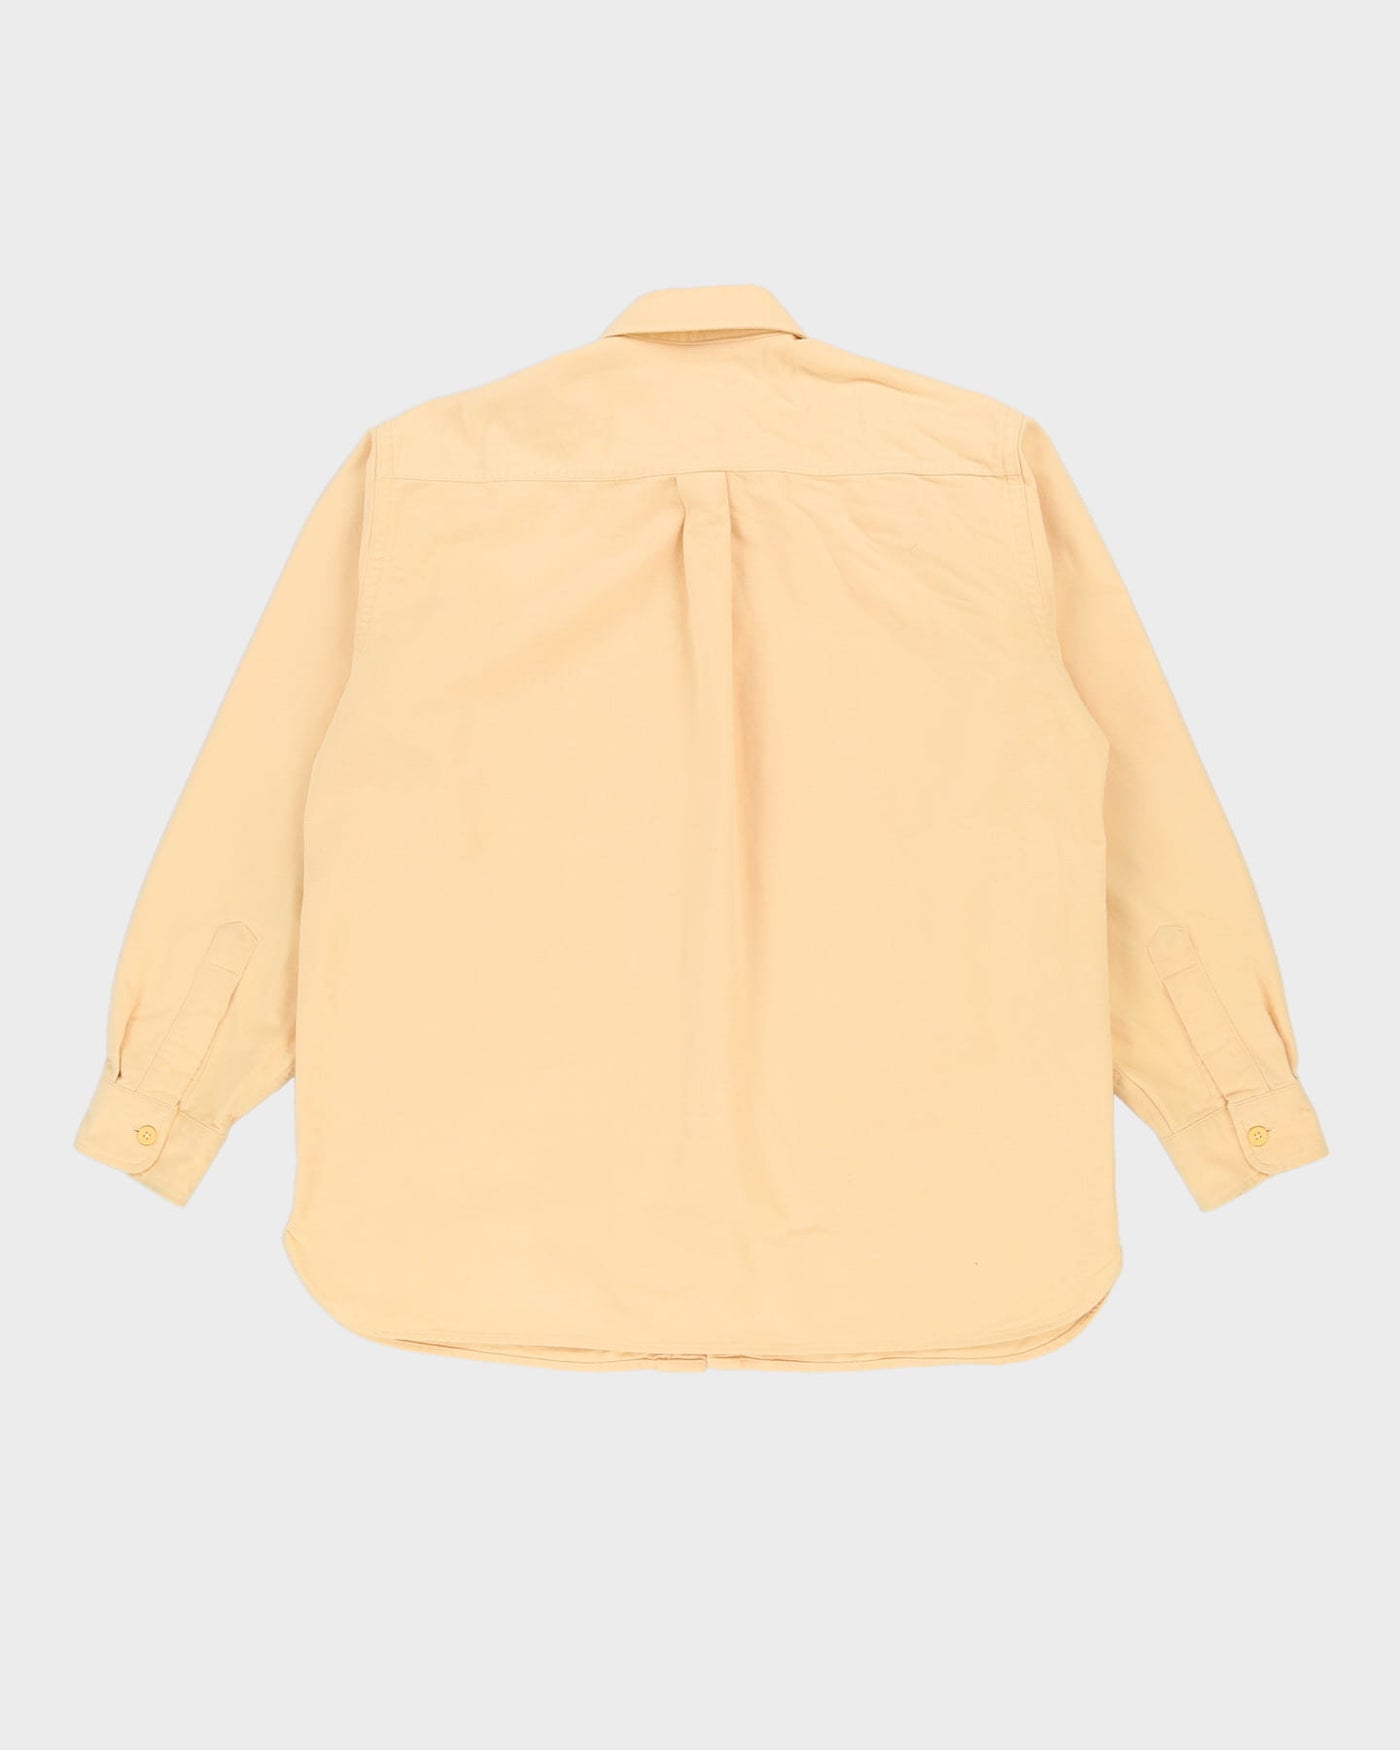 Vintage 90s L.L. Bean Long-Sleeve Yellow Shirt - XL